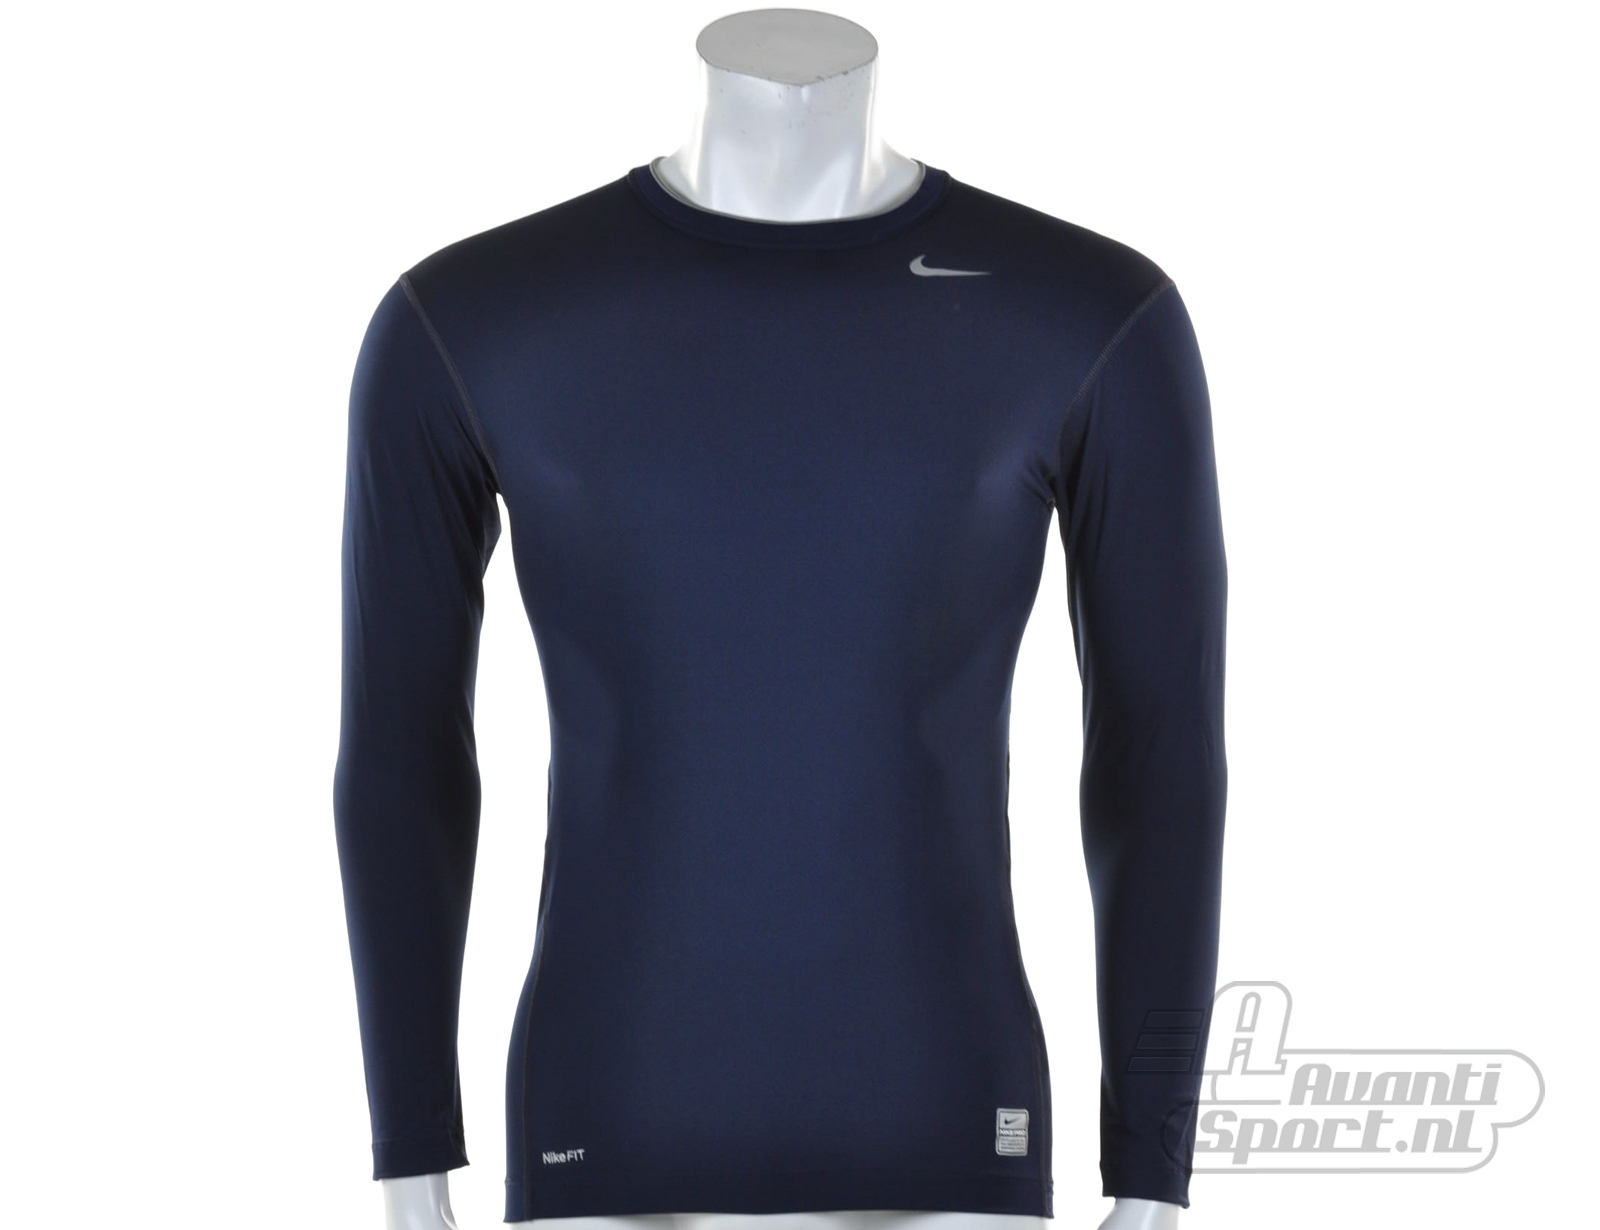 Avantisport - Nike - Pro Core Long Sleeve Tight Crew  - Nike Sport Shirt